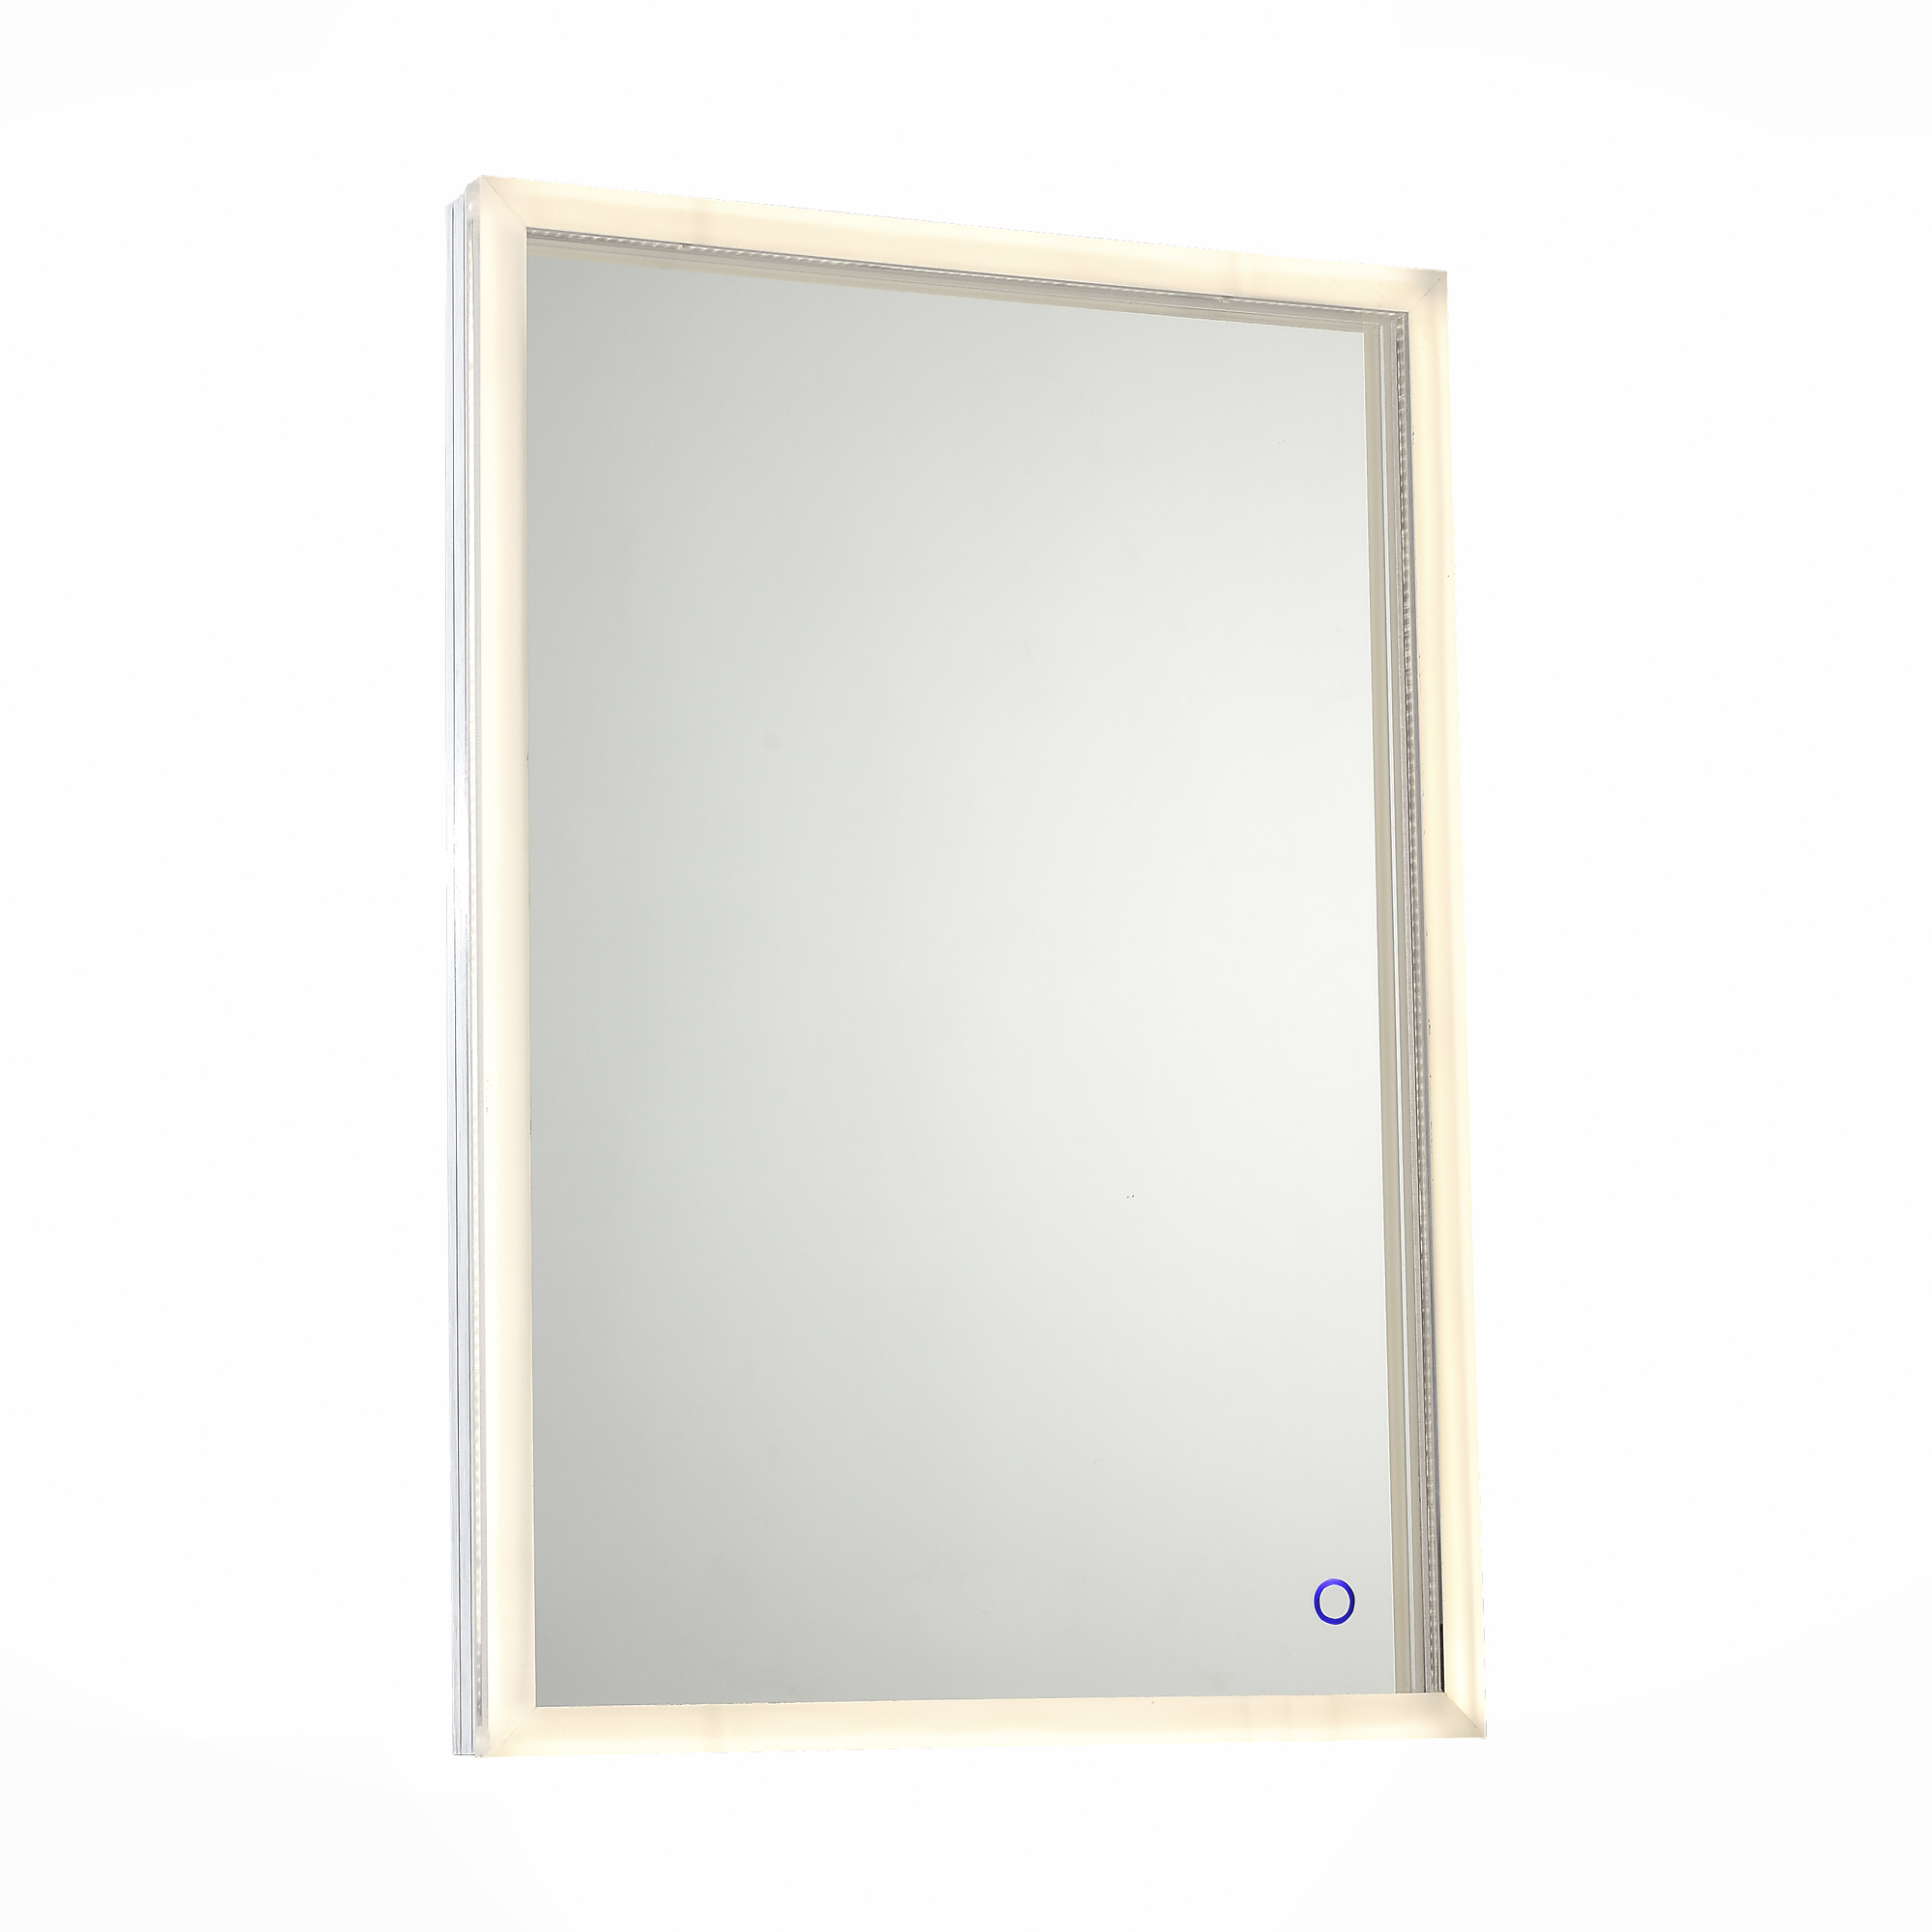 SL486.101.01 Зеркало с подсветкой, Specchio, серебристый + белый, LED 4500K 1*30W